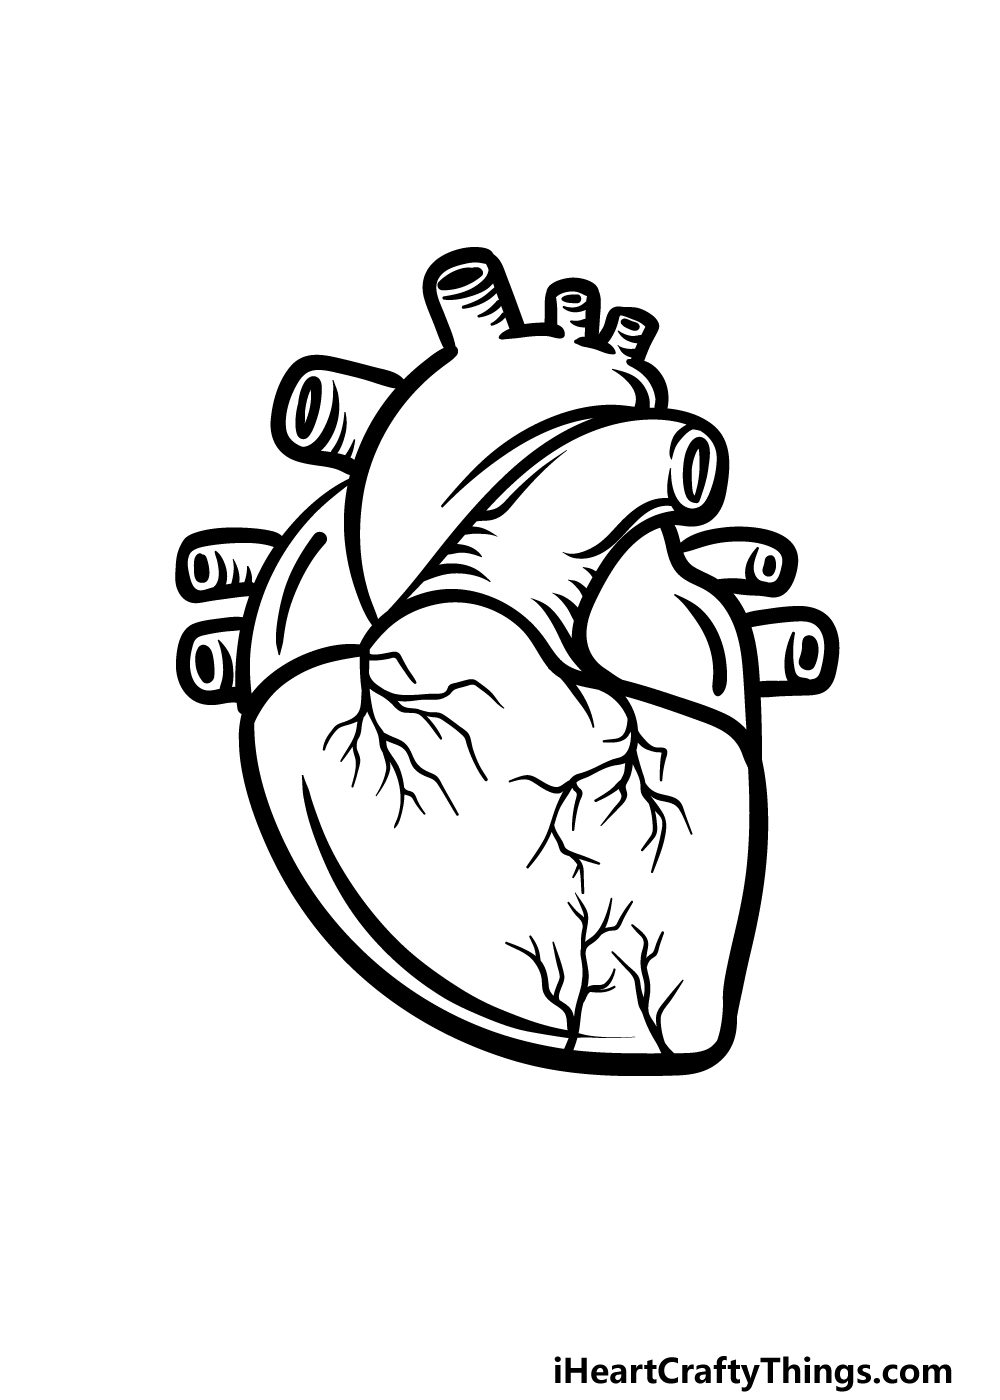 how to draw a cartoon heart step 5